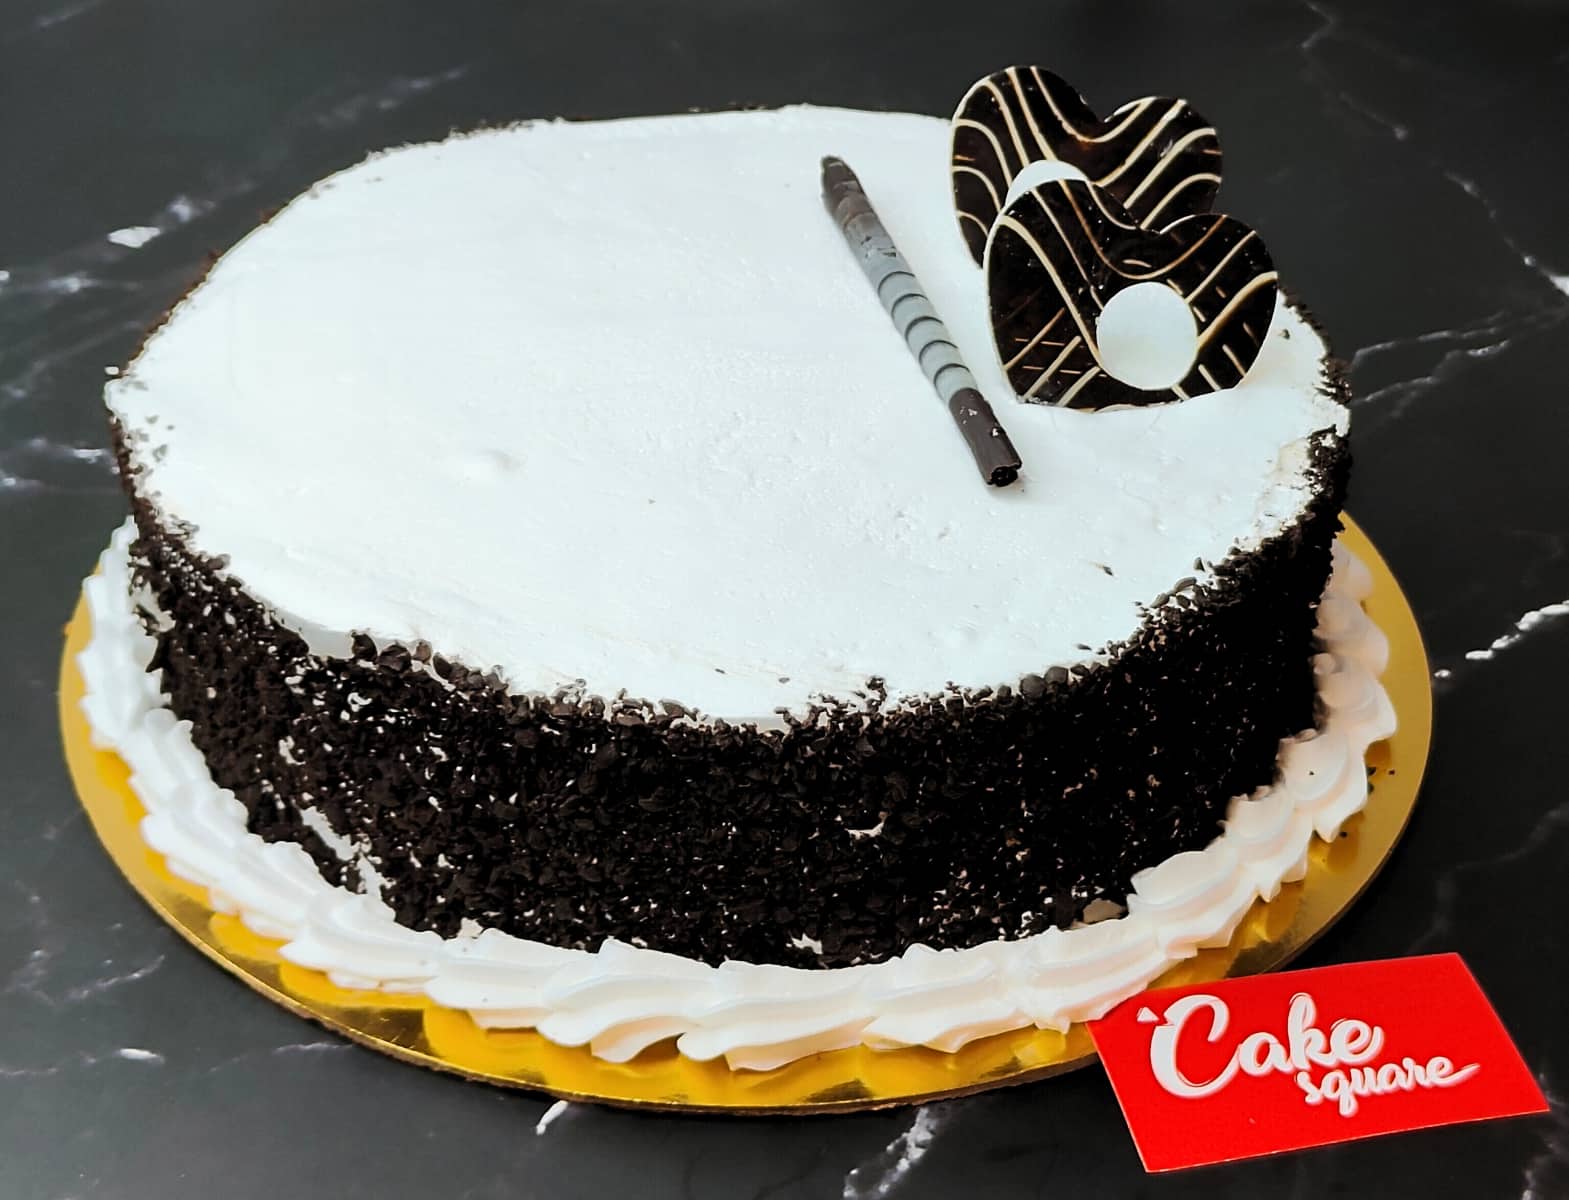 Engagement Cakes - Cake Square Chennai | Cake Shop in Chennai